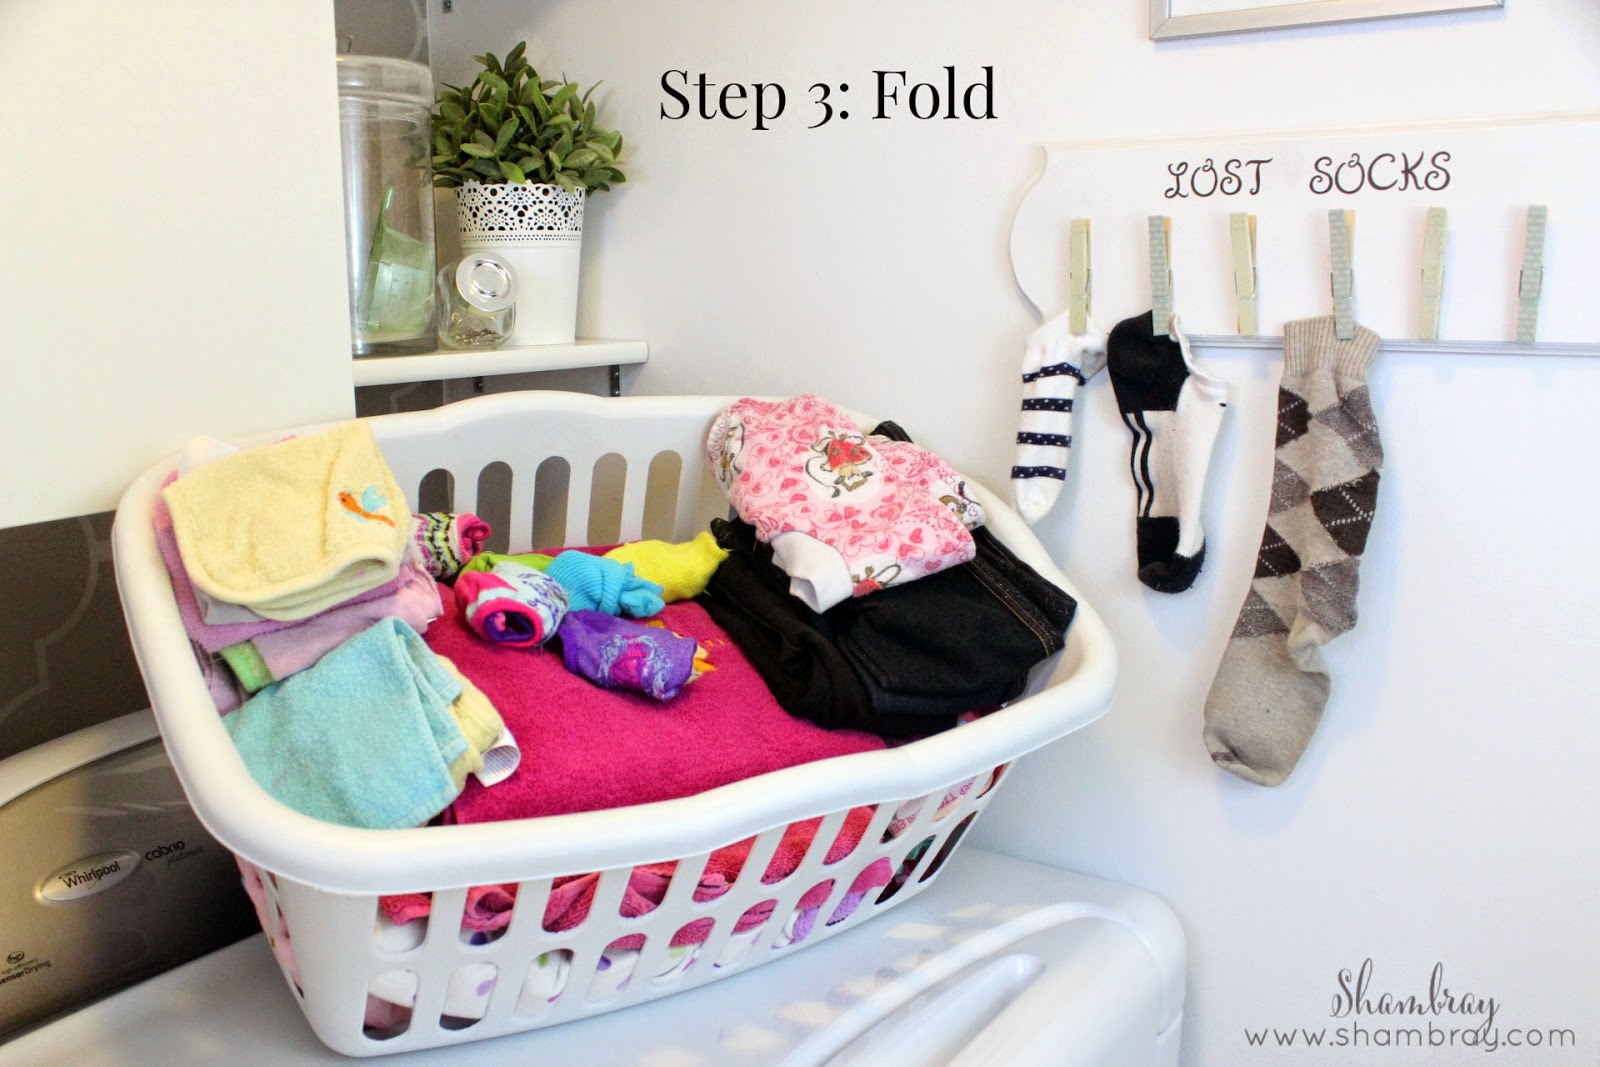 laundry, wash, dry, fold, put away